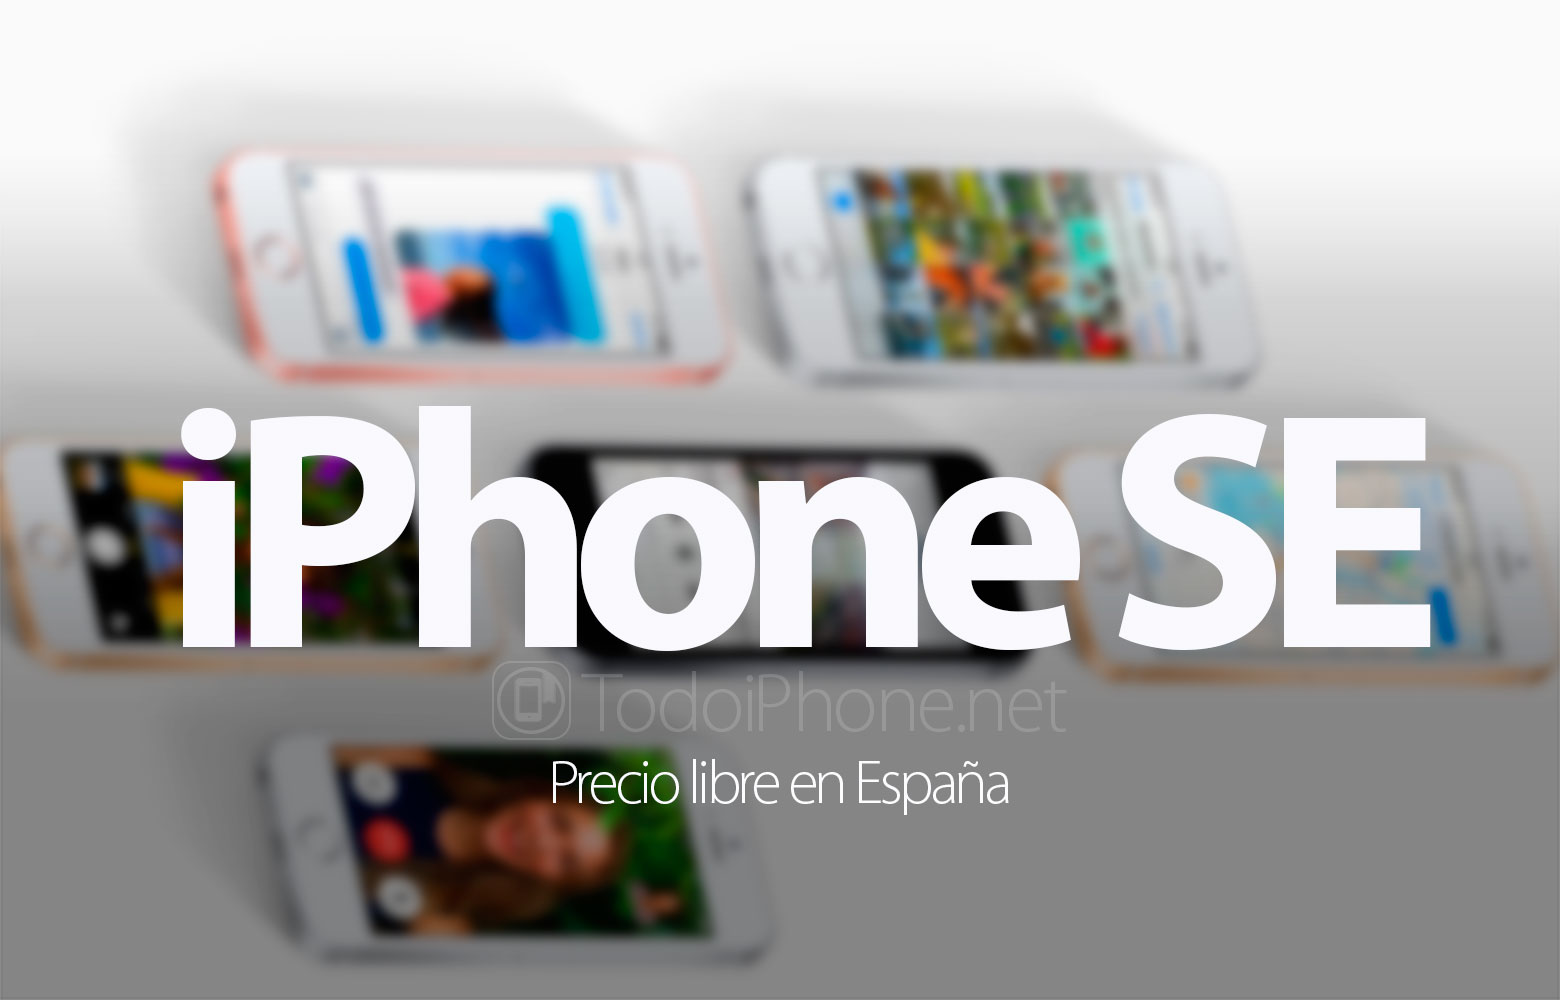 iphone-se-precio-libre-espana